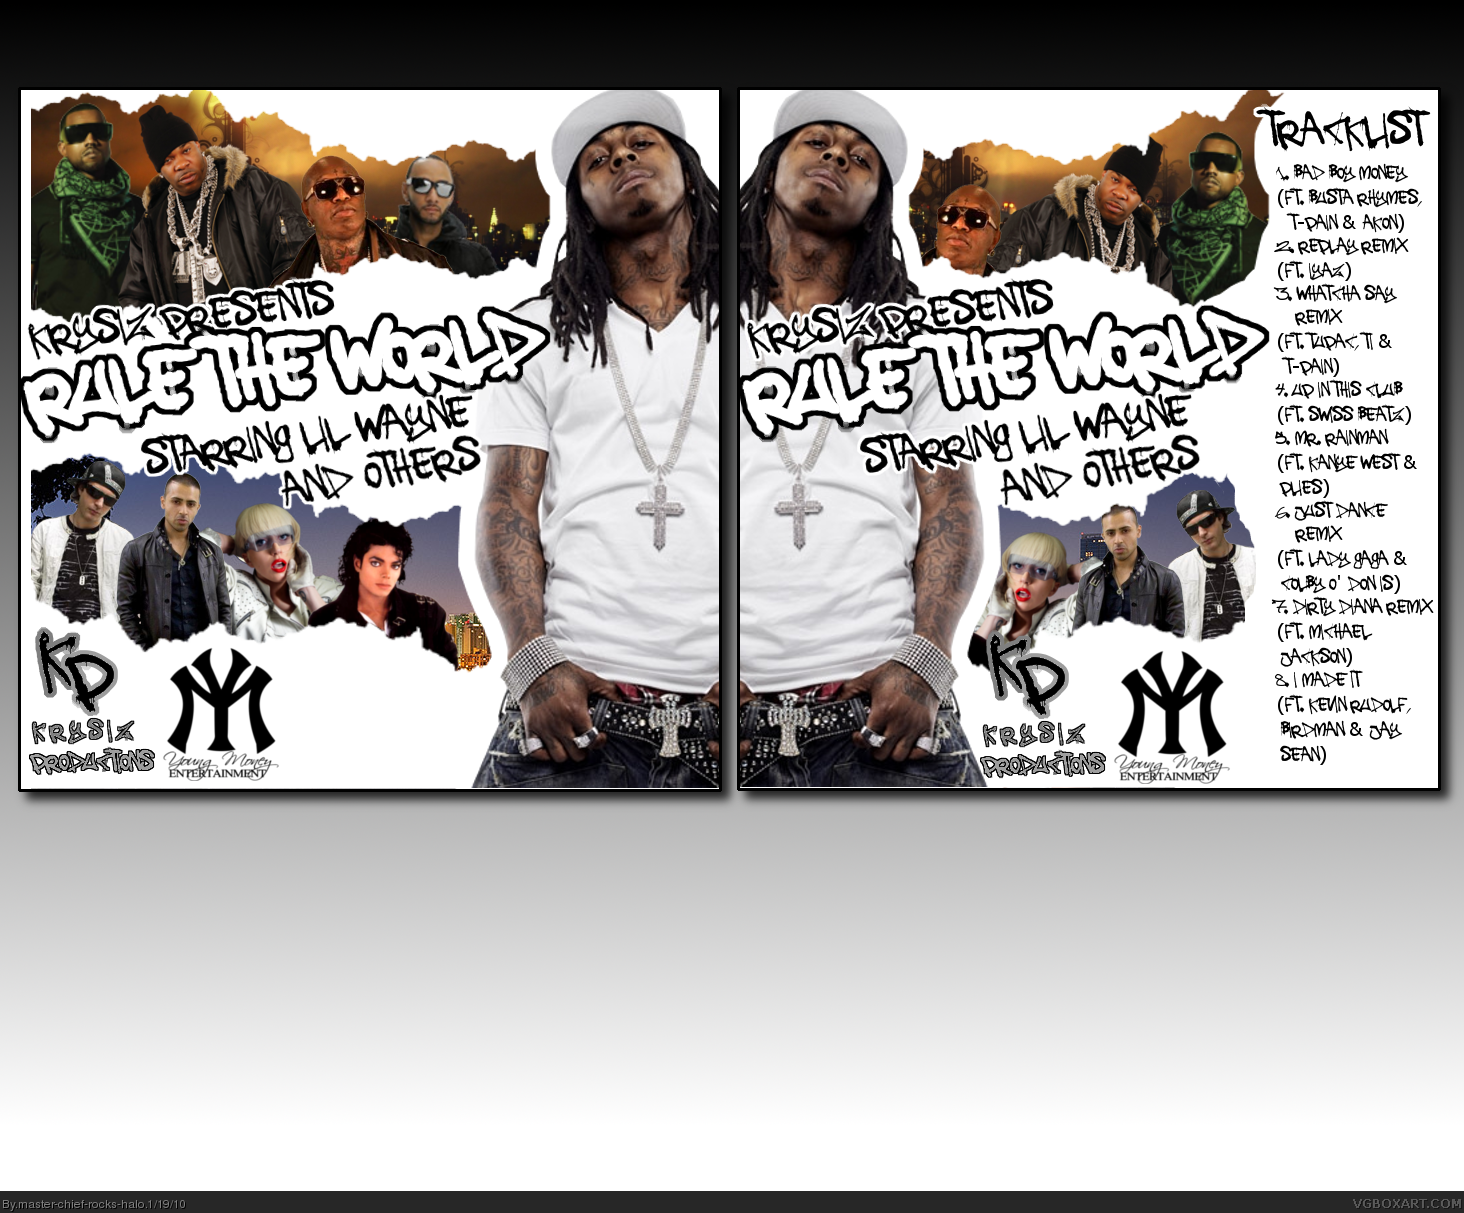 Krysiz Presents Rule The World Starring Lil Wayne box cover